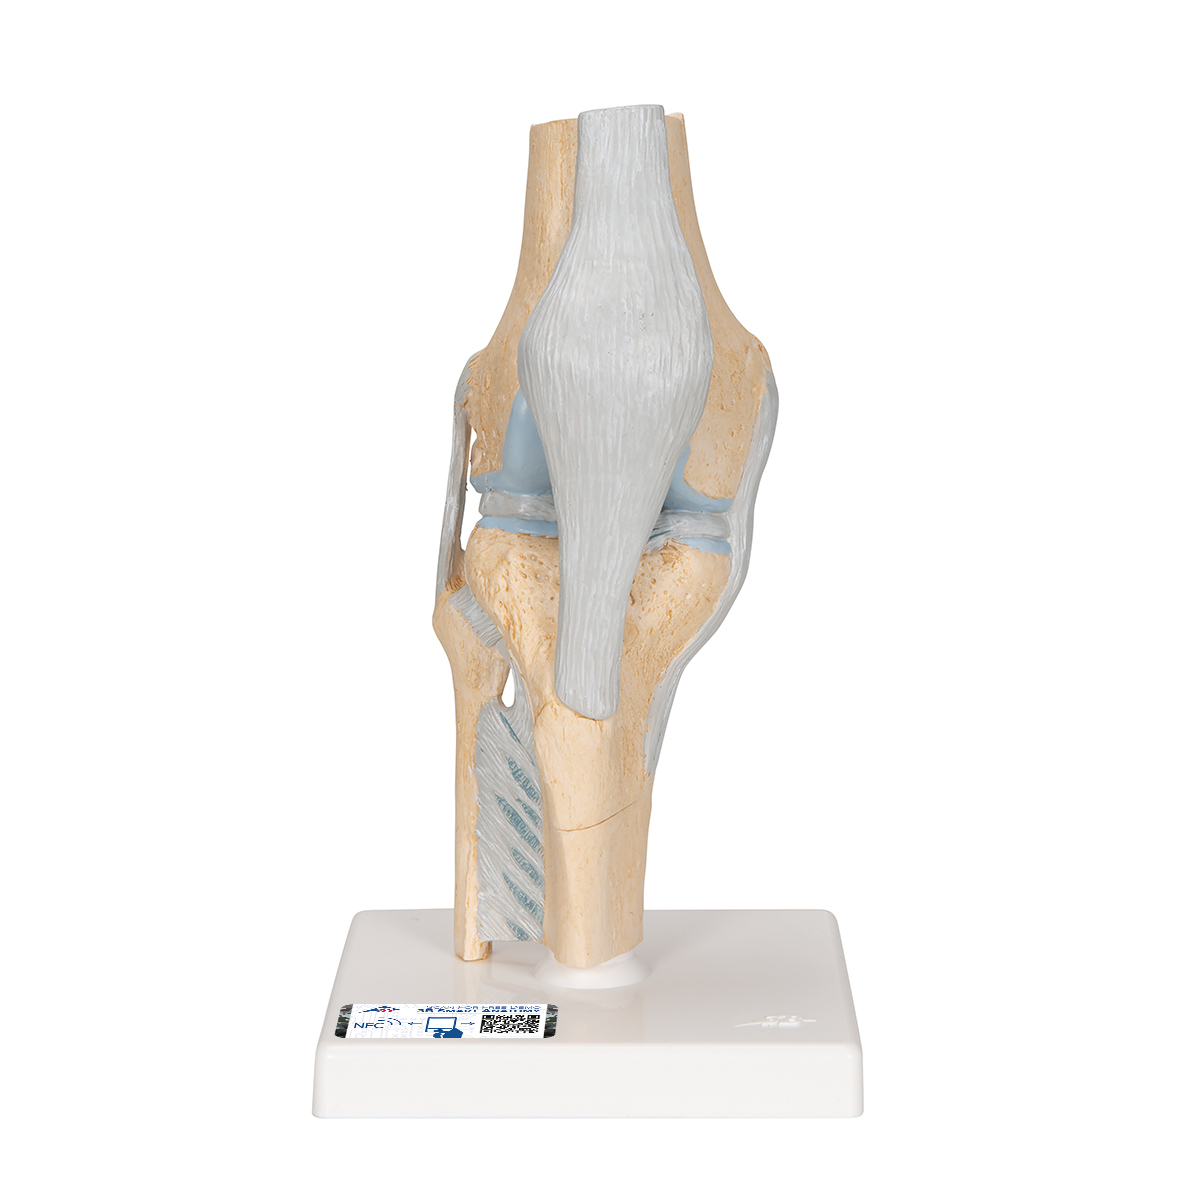 Gelenkschnitt-Modell des Knies, 3-teilig - 3B Smart Anatomy, Bestellnummer 1000180, A89, 3B Scientific